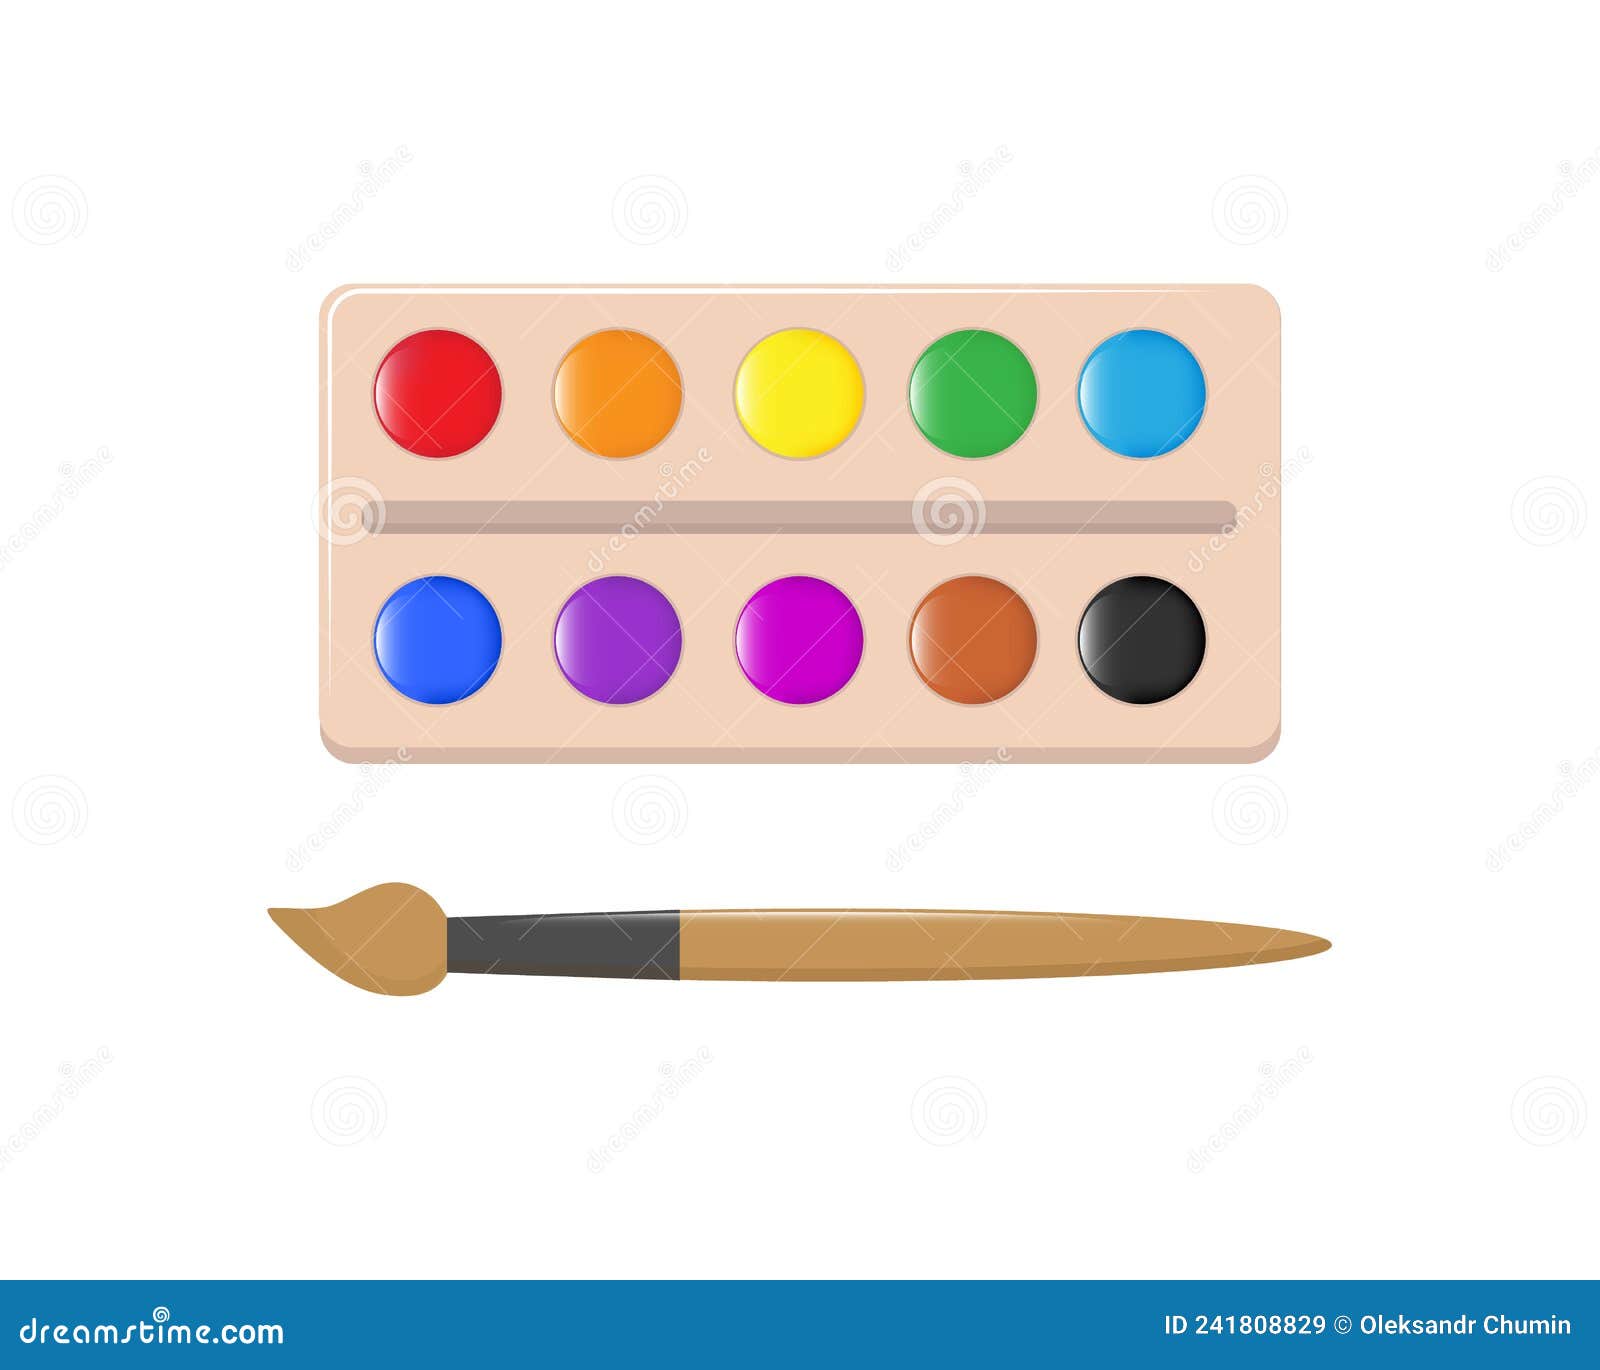 Art Supplies Clip Art Collection, Creativity, Drawing, Paint, Pencil,  Palette, Brush, 